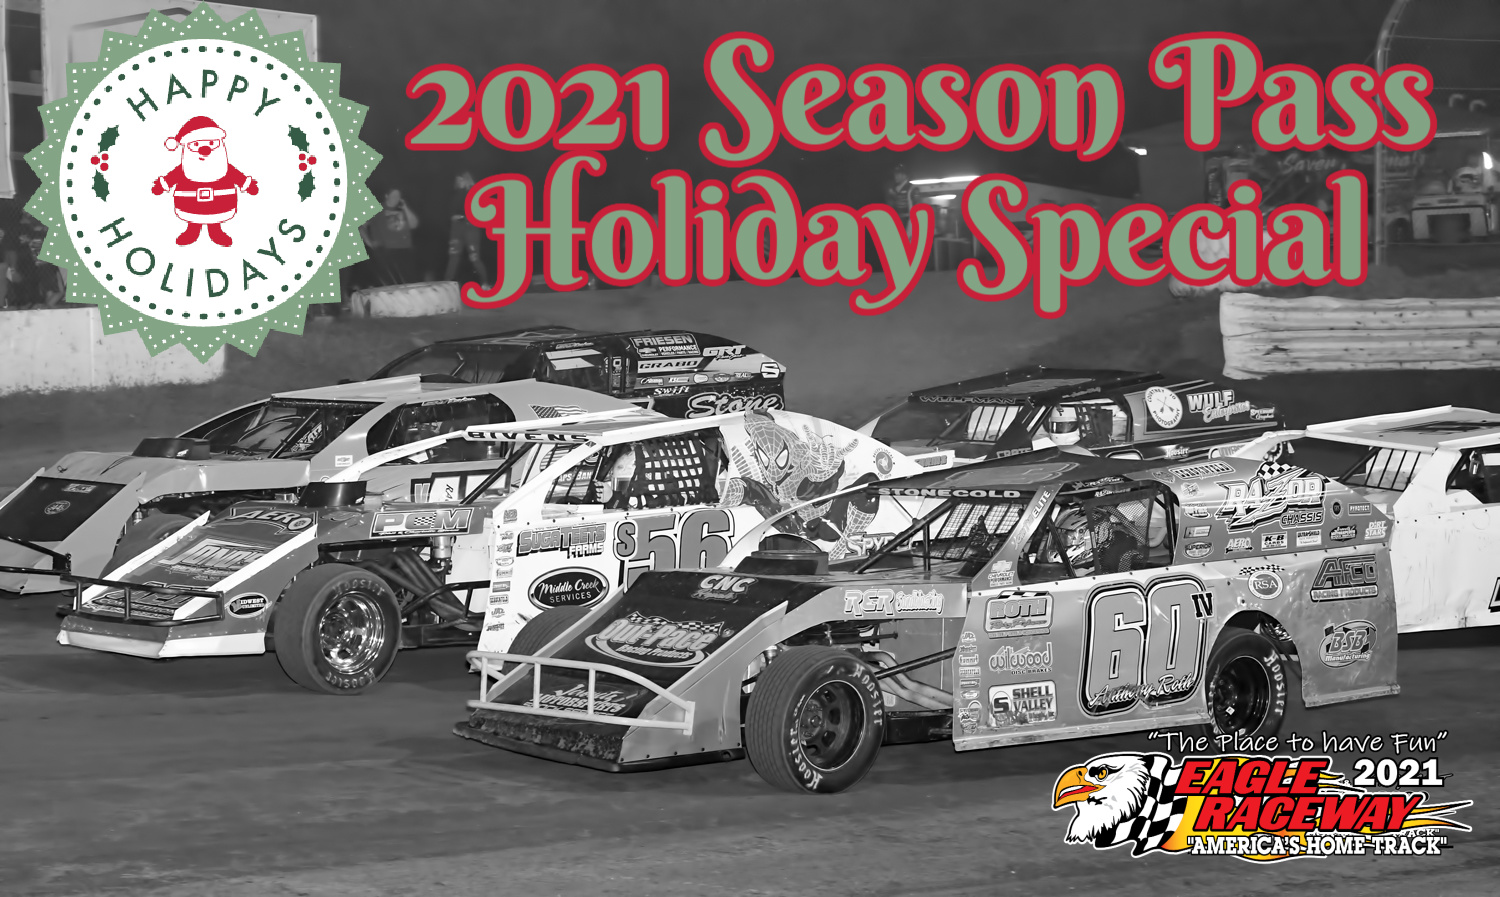 Eagle Raceway 2021 Season Pass Holiday Special Dec 2 & 3rd only. - Eagle Raceway